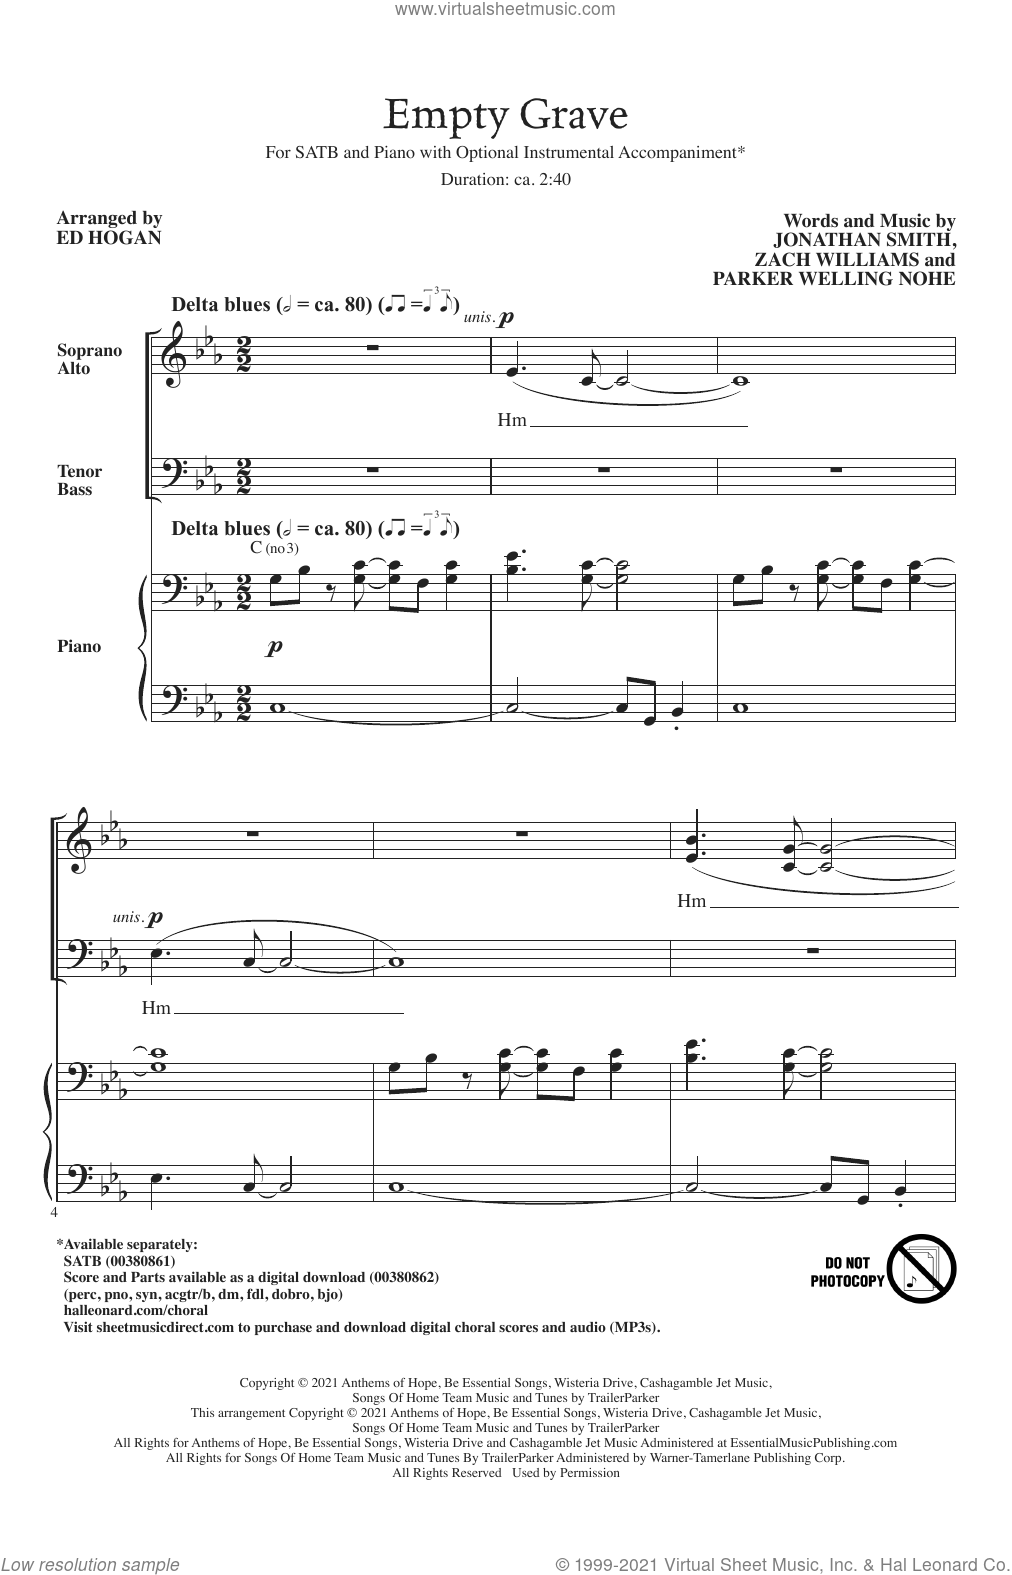 SATB Choral Manuscript Paper (Blank) - 4-Part - Digital Sheet Music